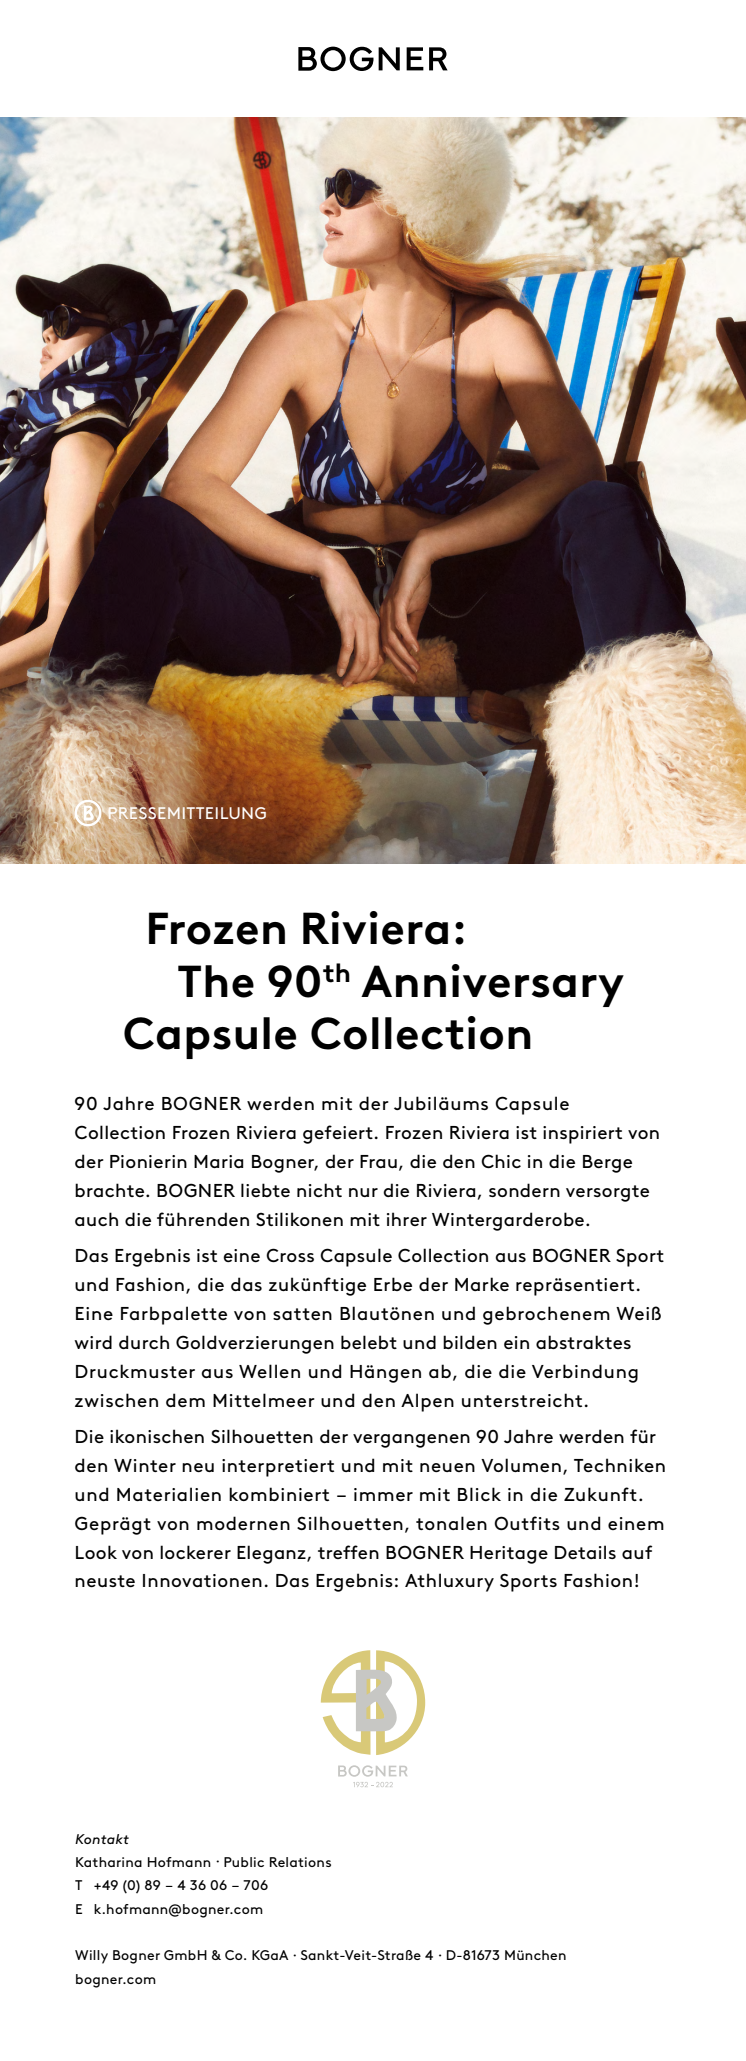 BOGNER_Pressemitteilung_Anniversary Capsule Collection Frozen Riviera.pdf